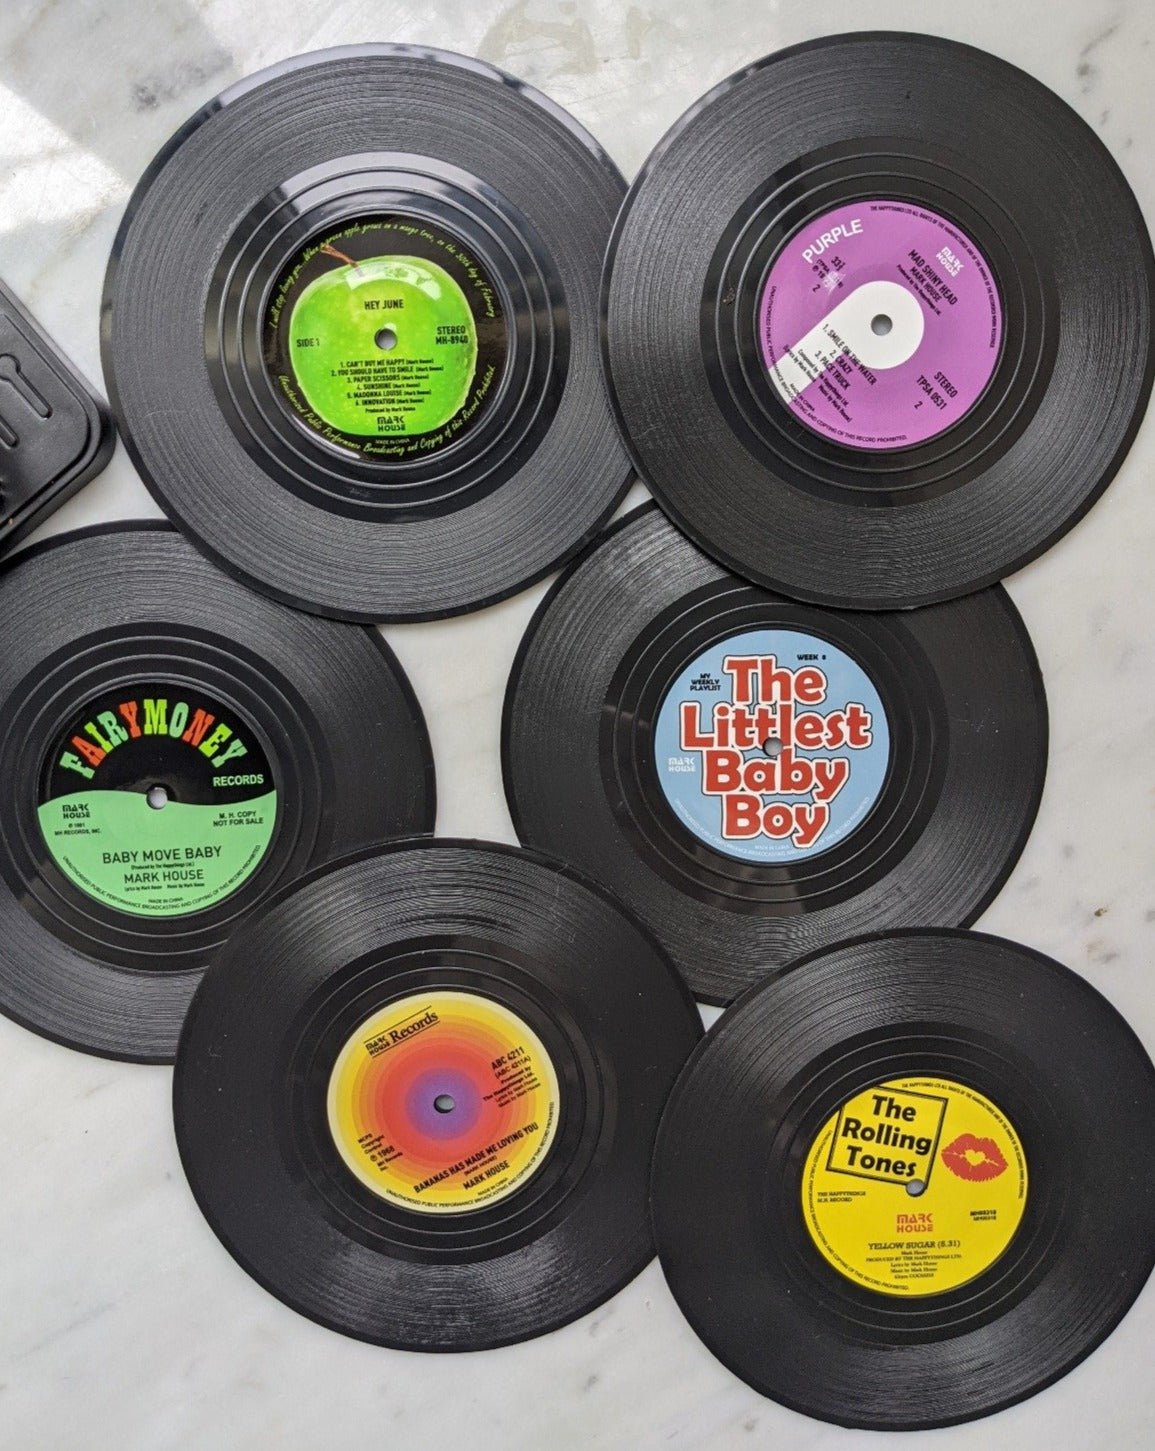 Retro Vinyl Record Coasters